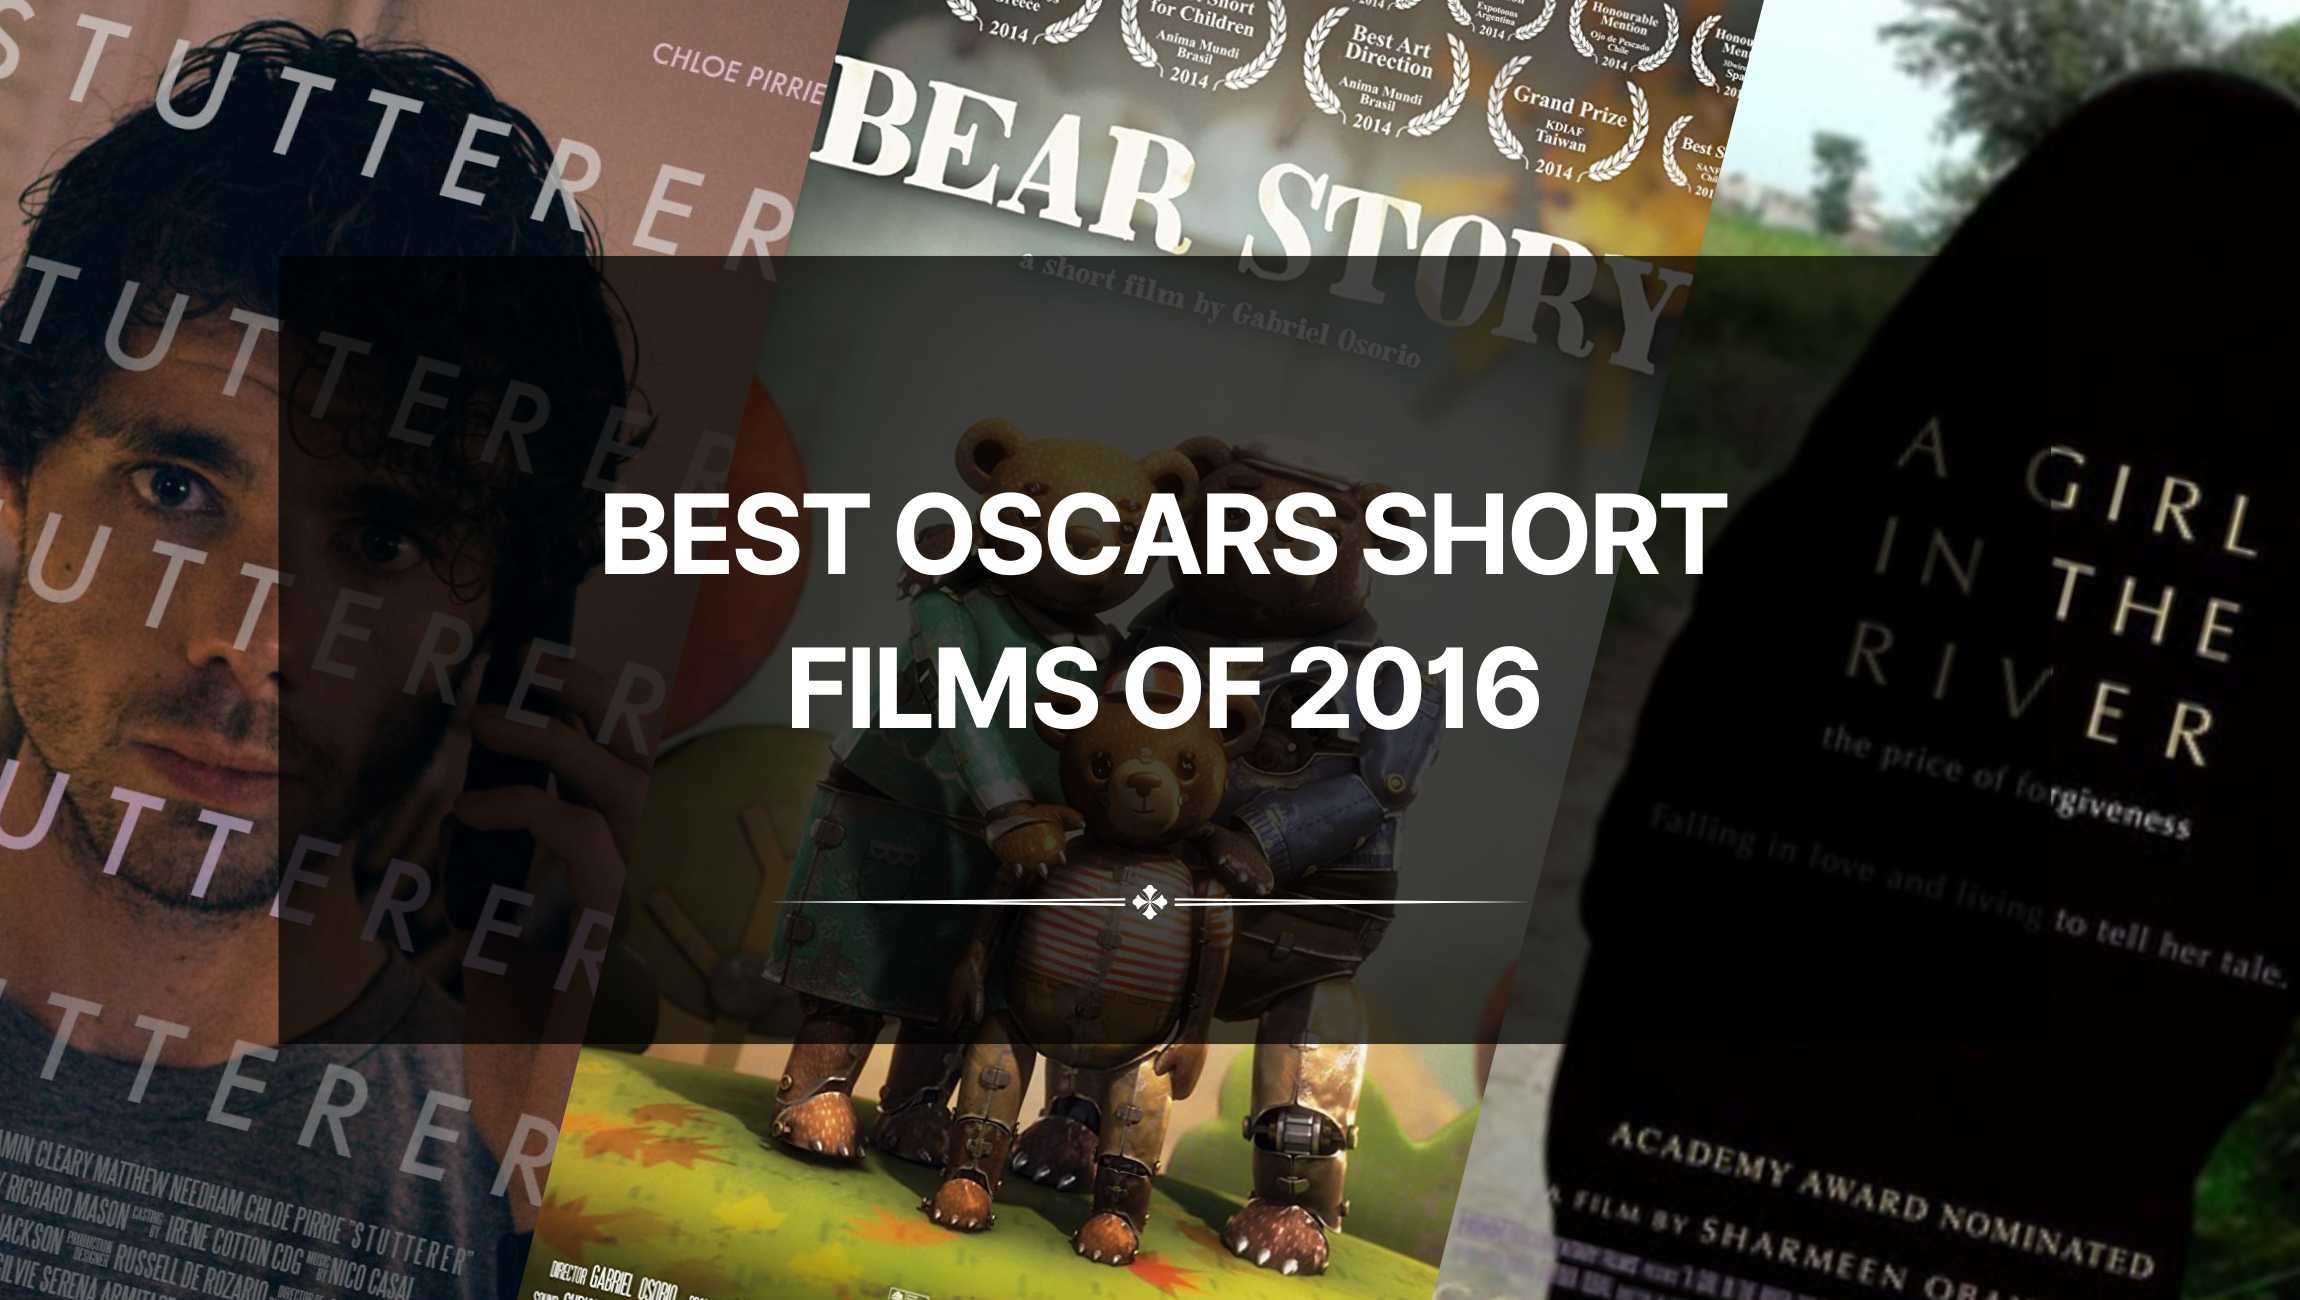 The Best Oscars Short Films of 2016 – A Remarkable Line-Up